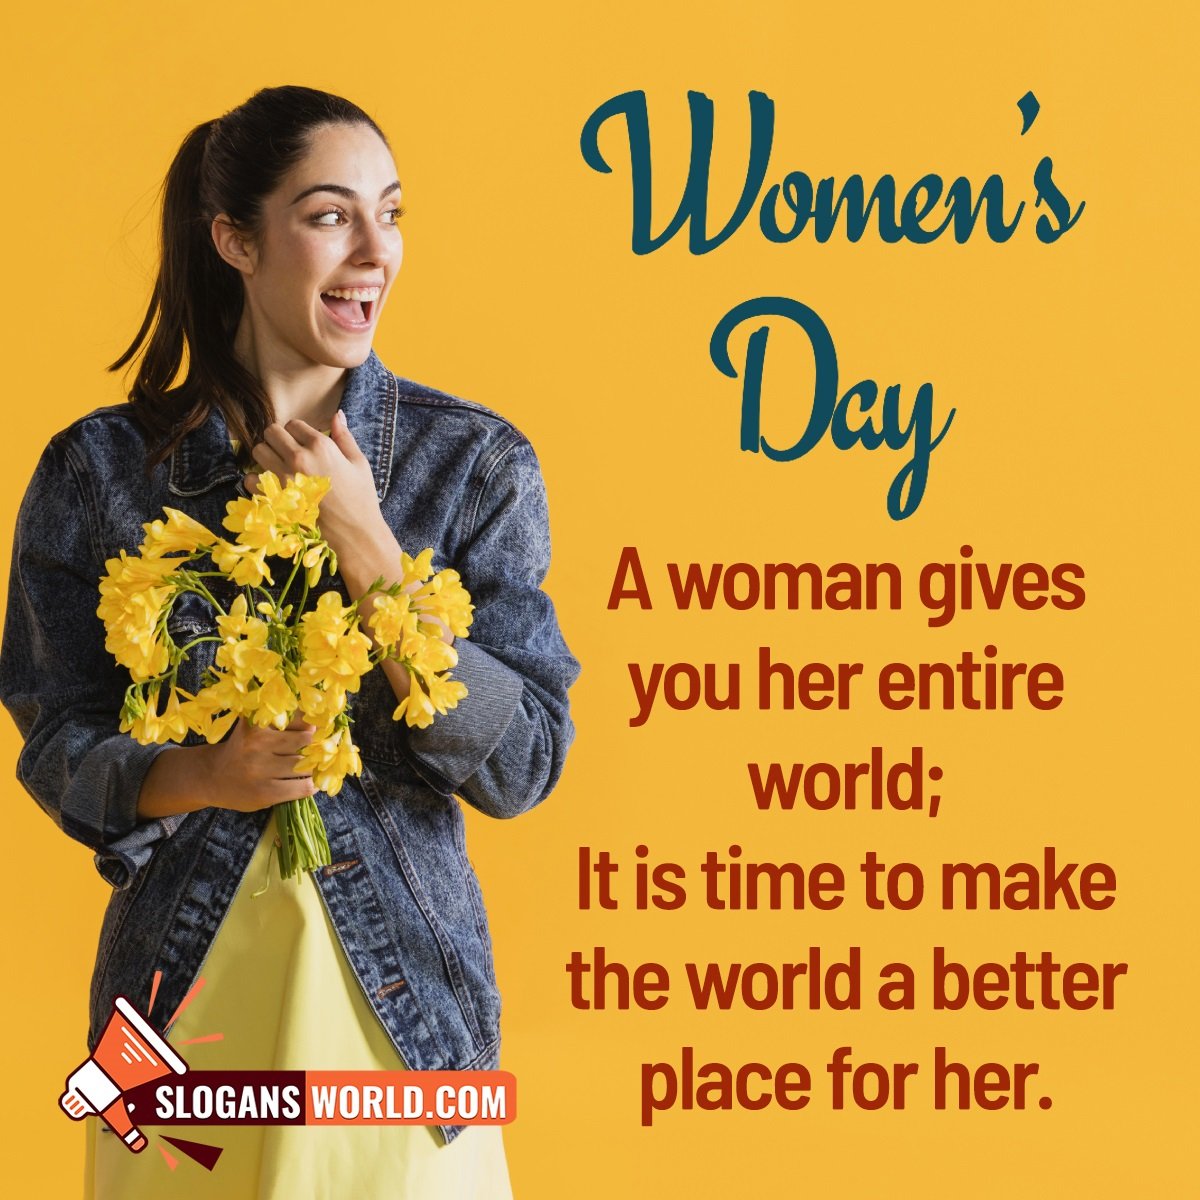 Slogan On Women’s Day